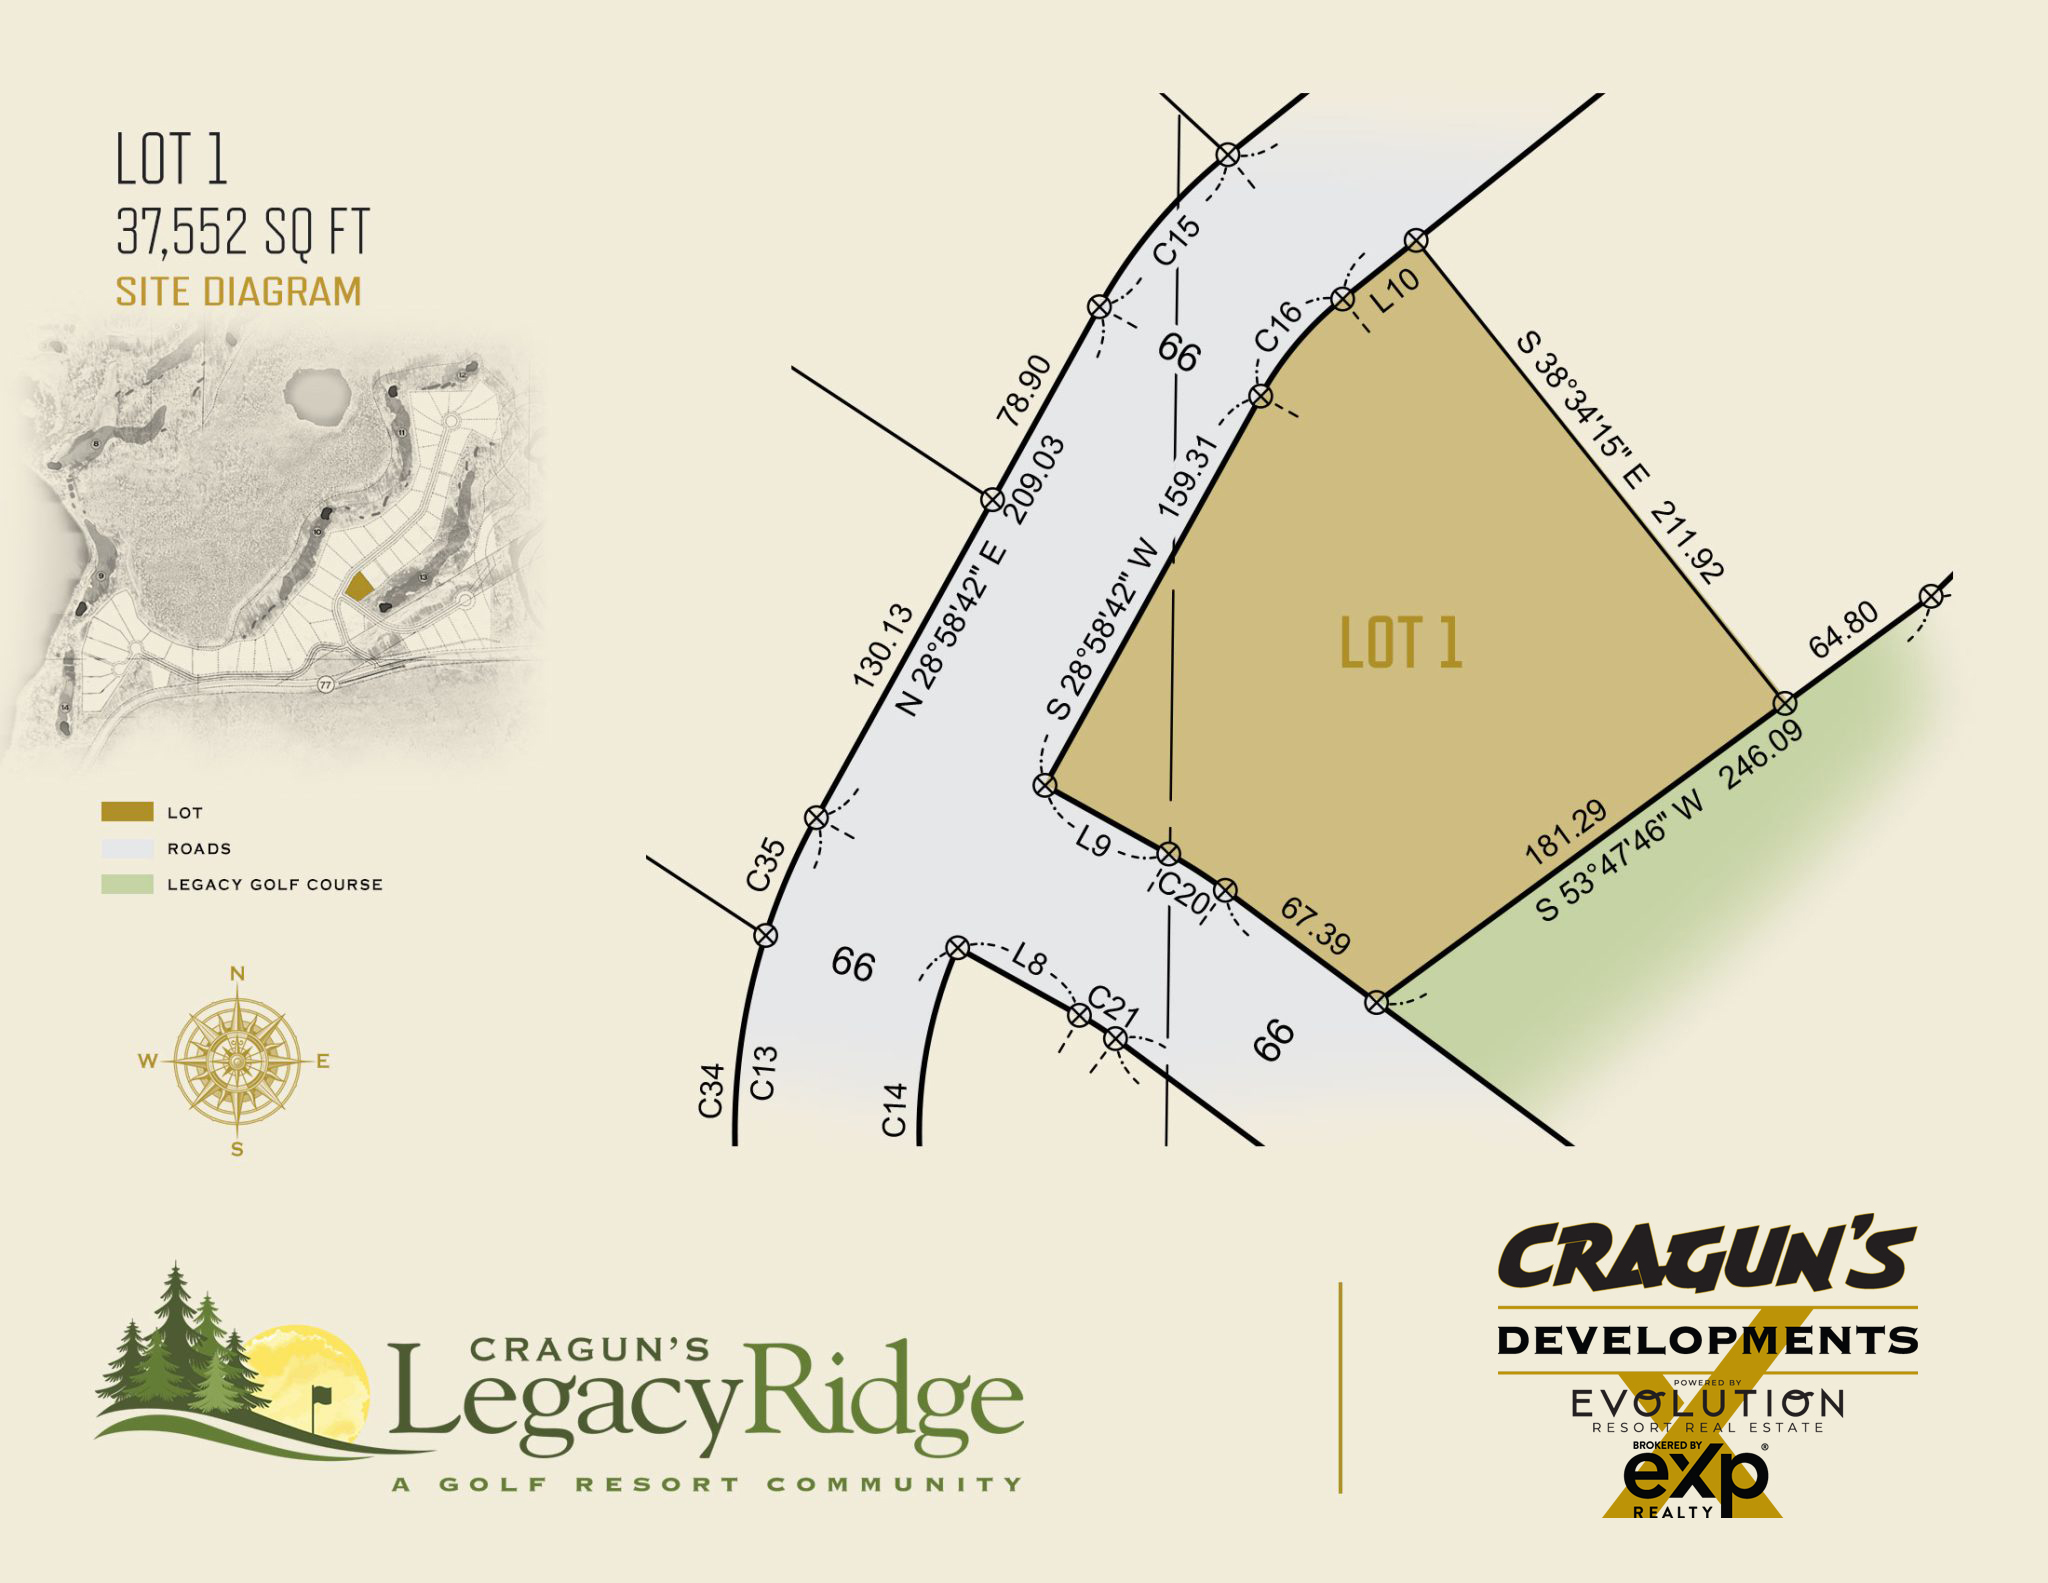 Legacy Ridge Lot 1 at Cragun's Developments in Brainerd, MN